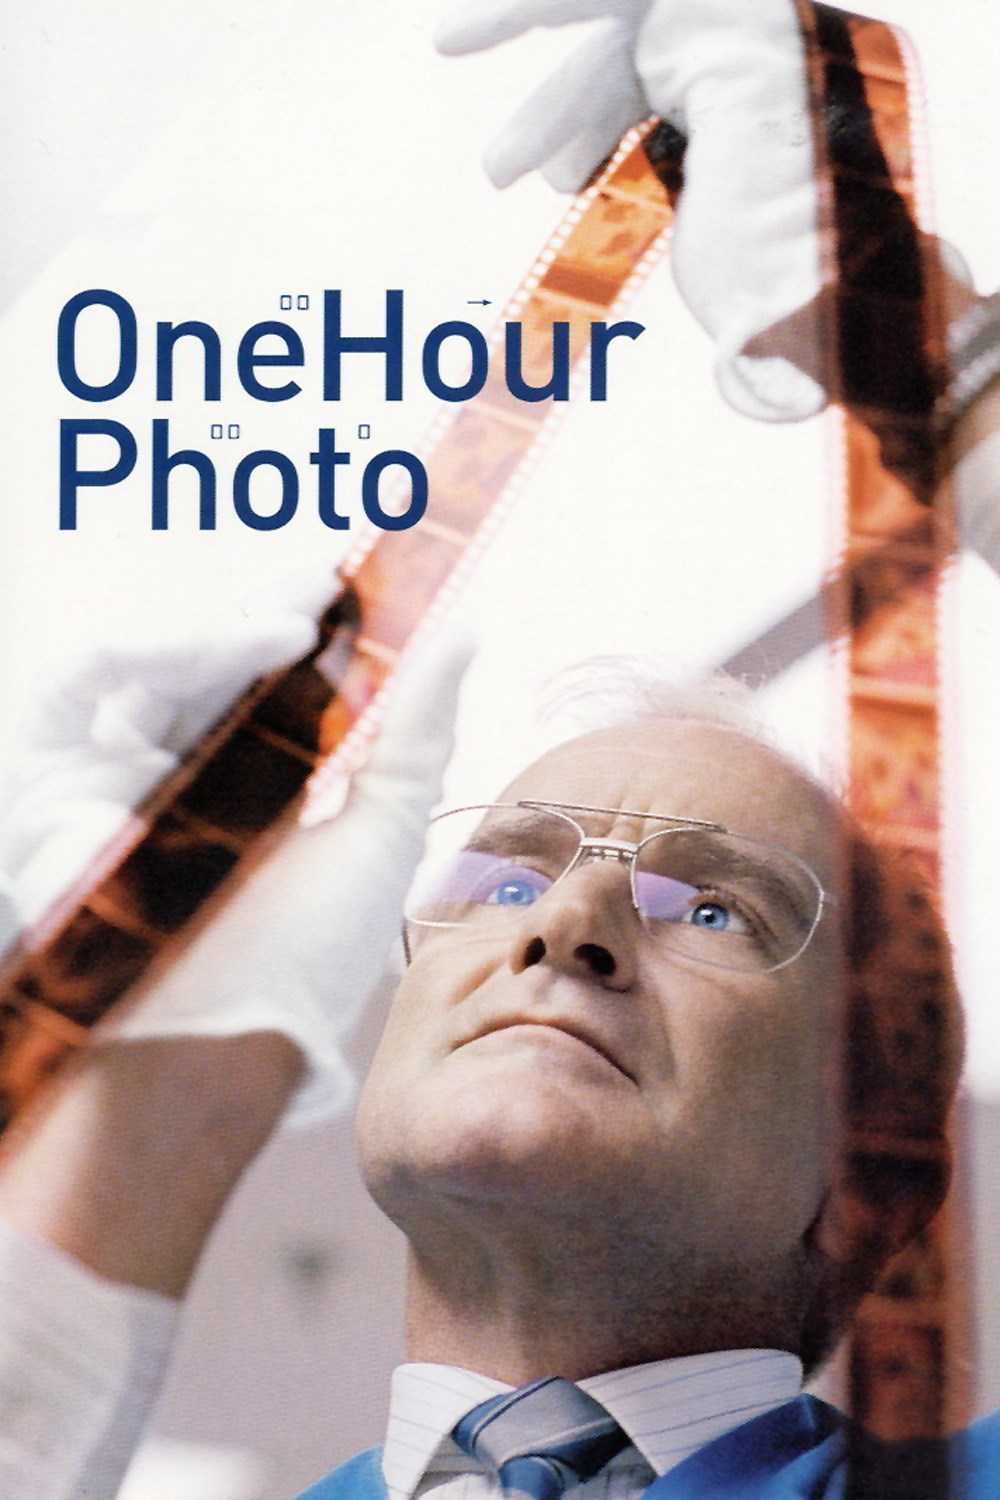 Фильм фото за час 2002 - отзыв на кино, обзор на one hour photo с робином уильямсом